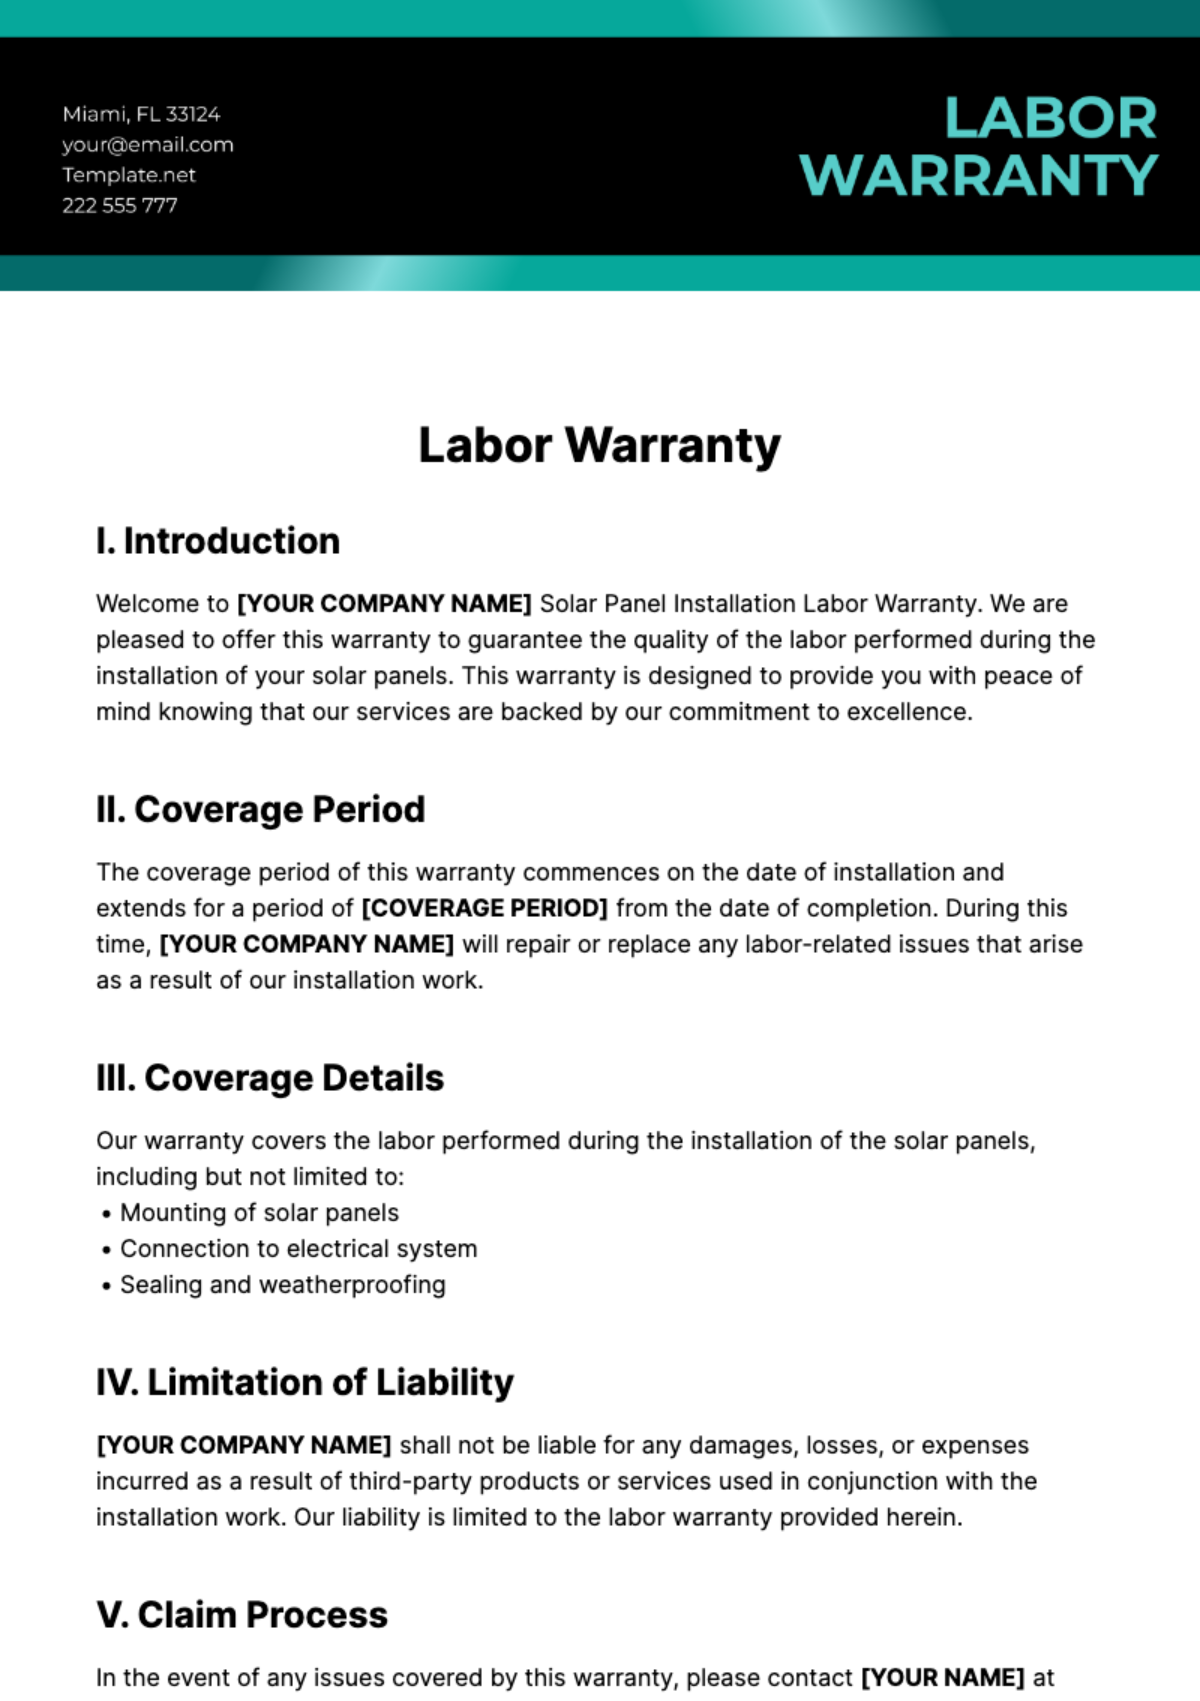 Labor Warranty Template